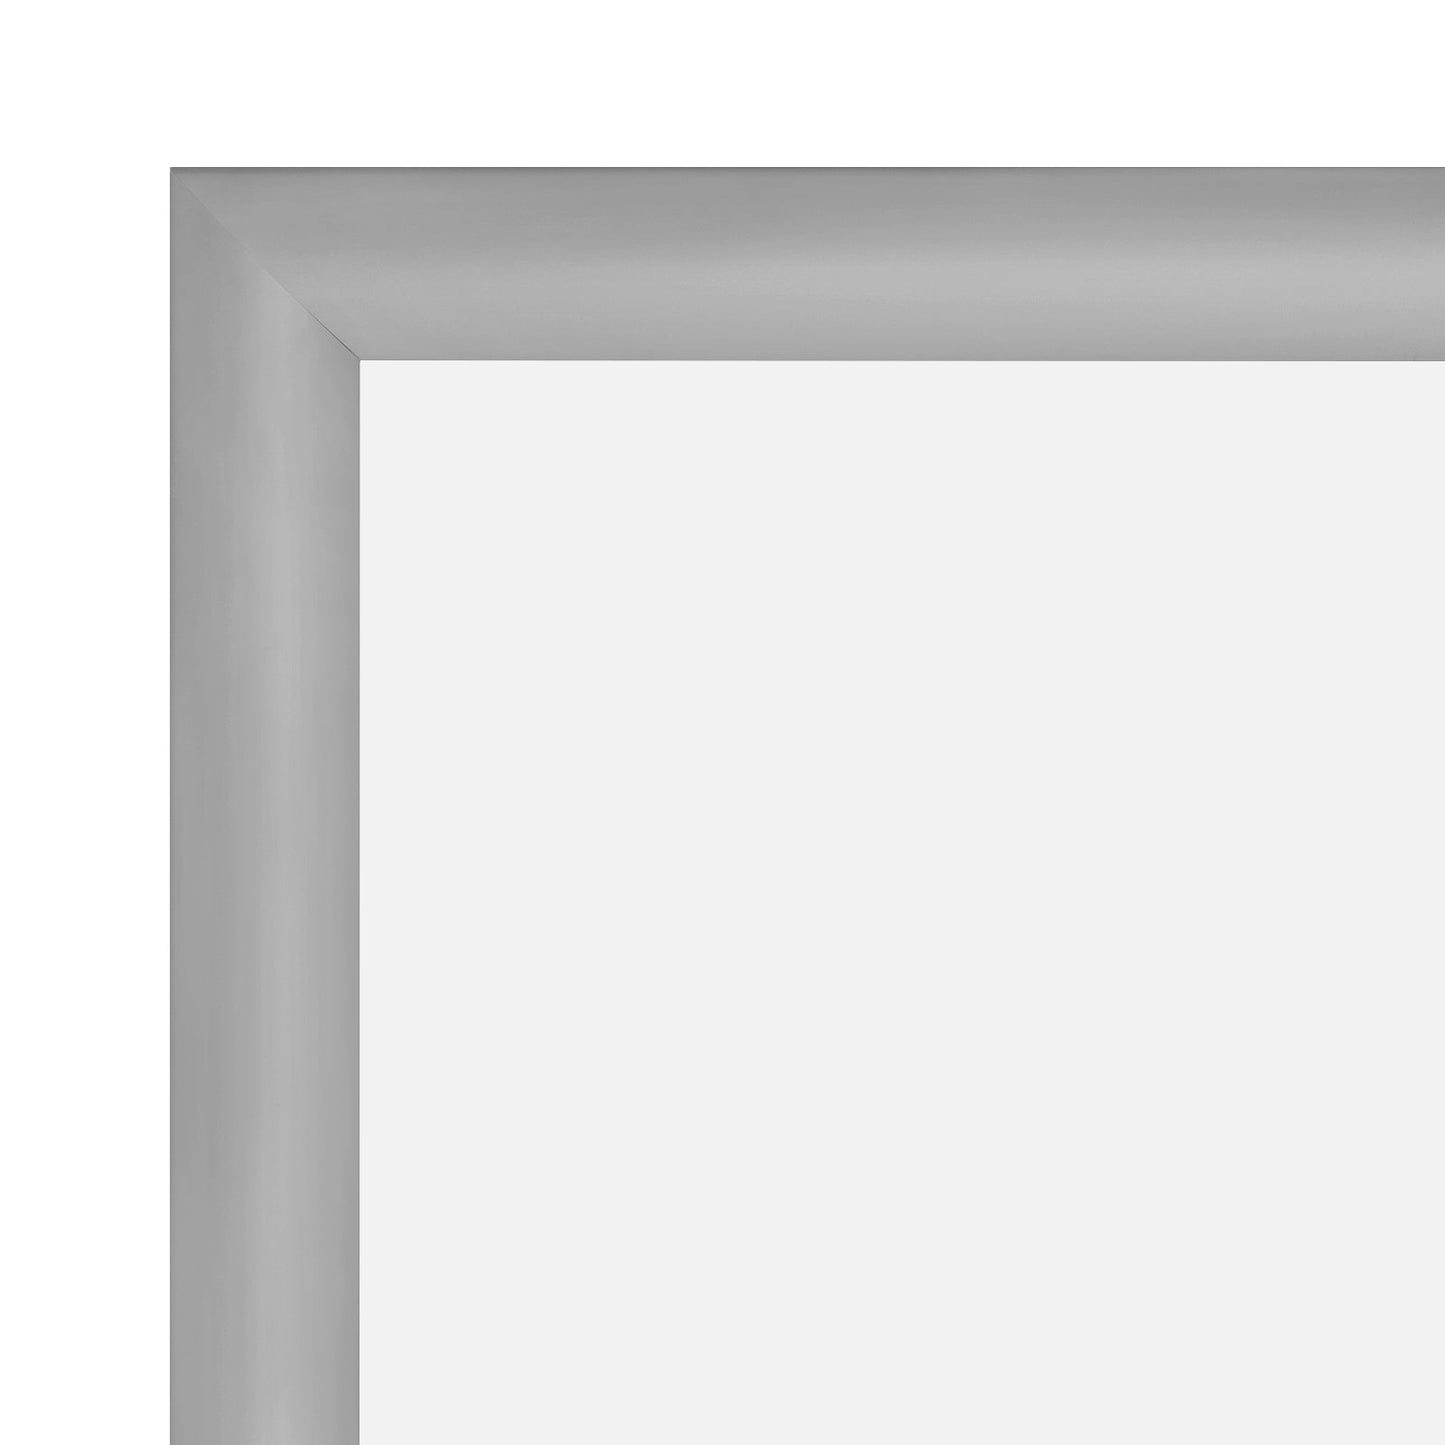 10x20 Silver SnapeZo® Snap Frame - 1.2" Profile - Snap Frames Direct